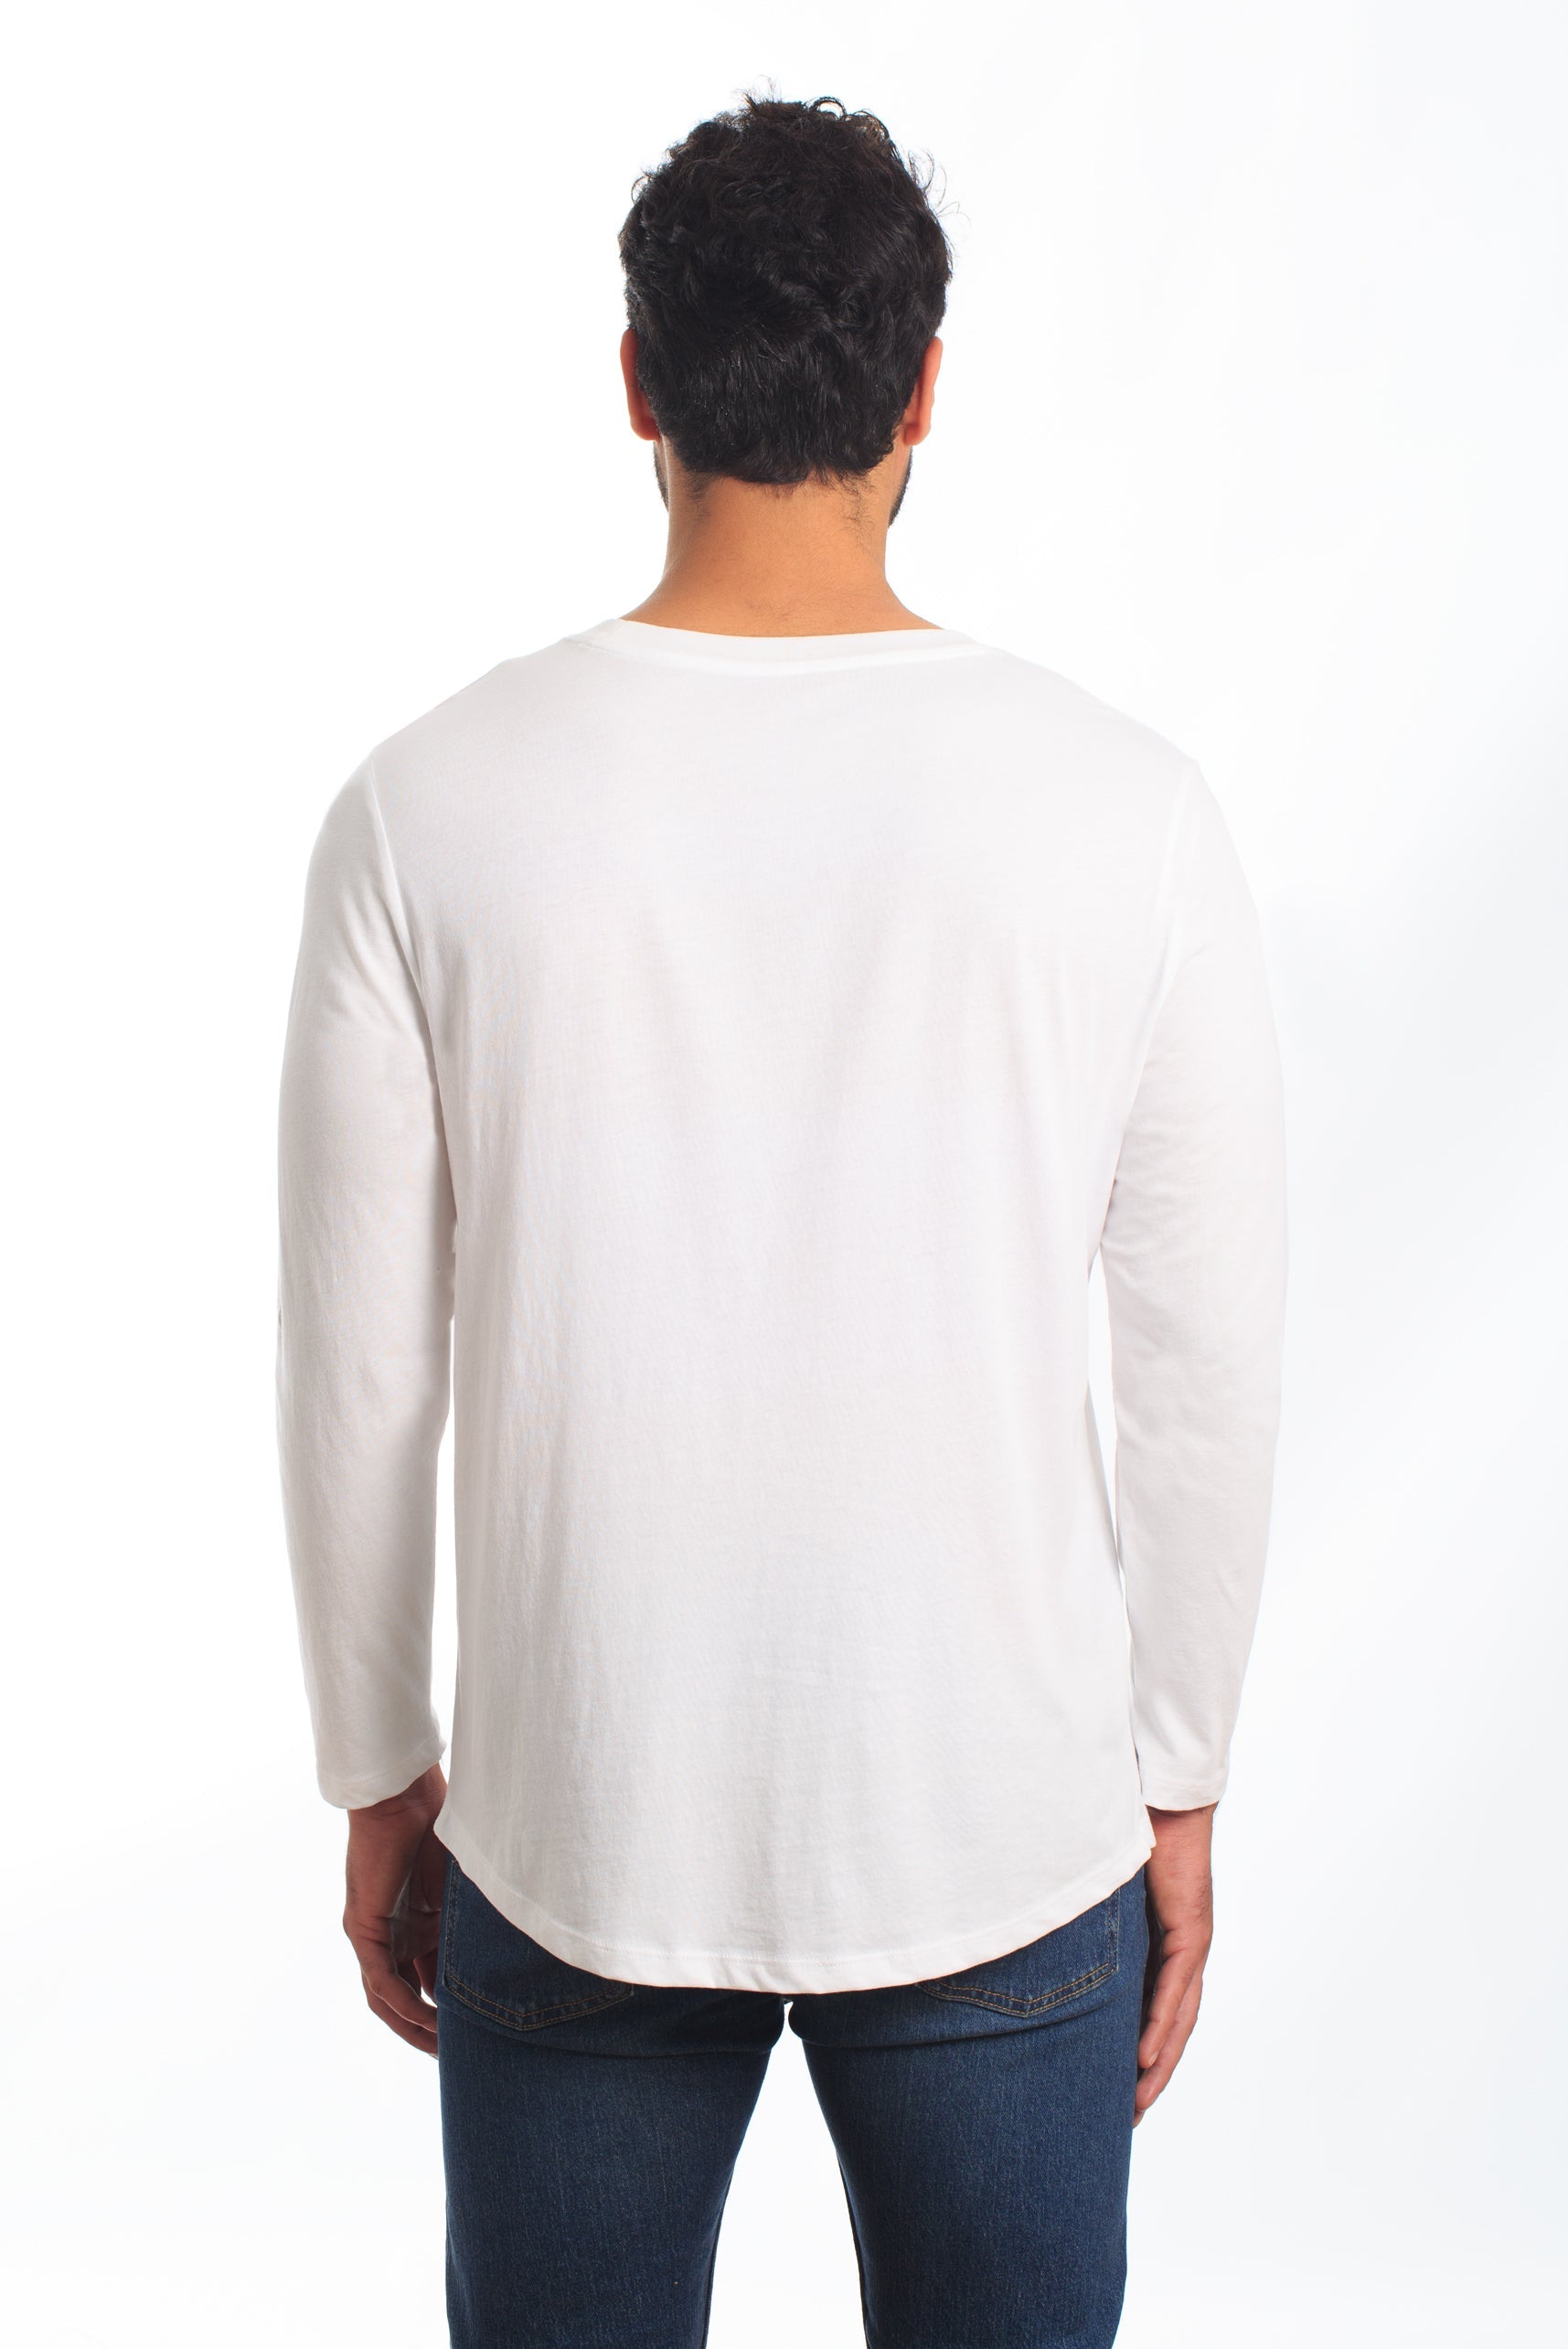 White Long Sleeve T-Shirt TEL-108 Back